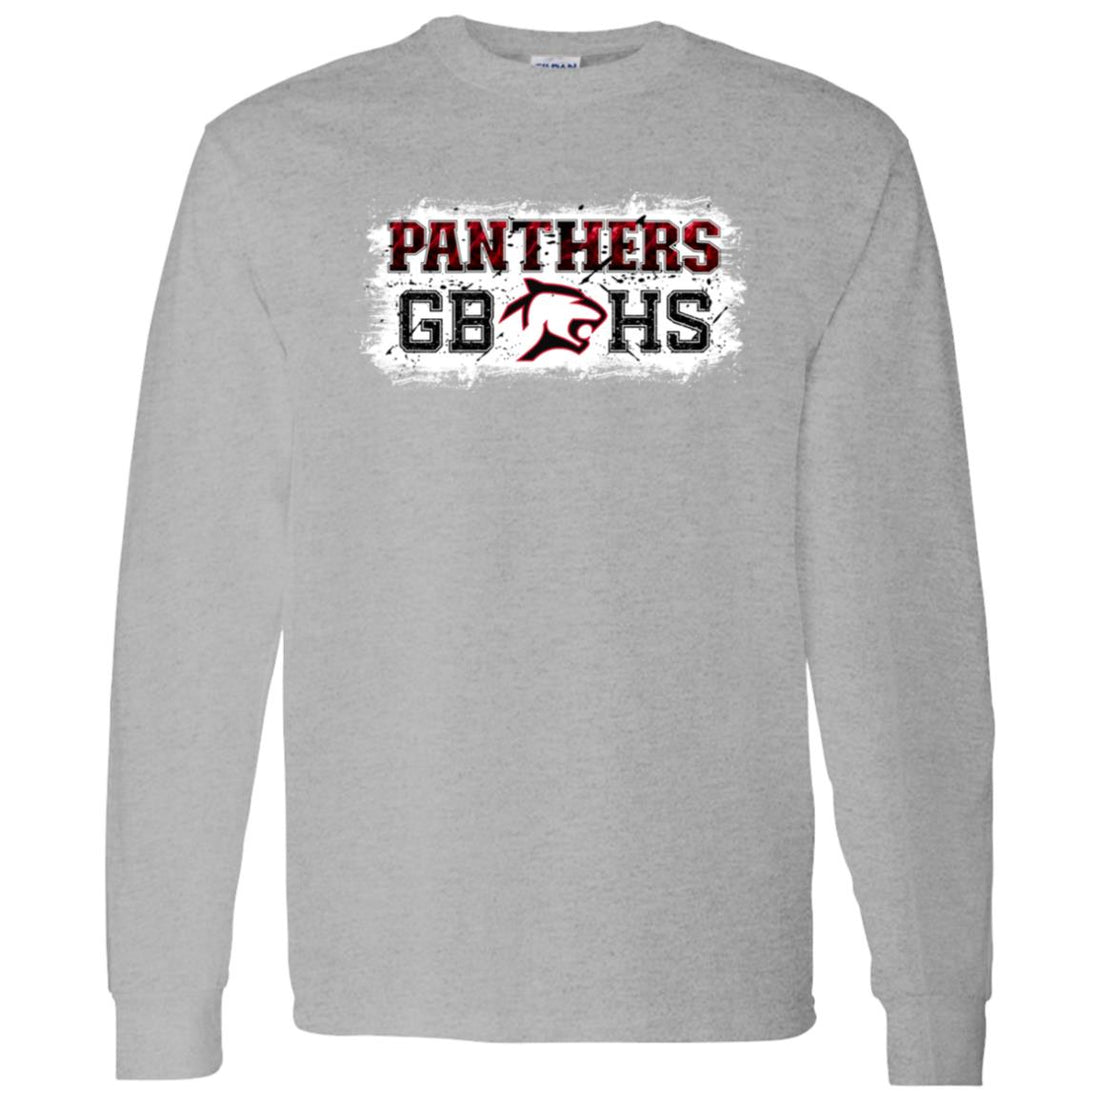 Panthers GBHS LS T-Shirt 5.3 oz. - T-Shirts - Positively Sassy - Panthers GBHS LS T-Shirt 5.3 oz.